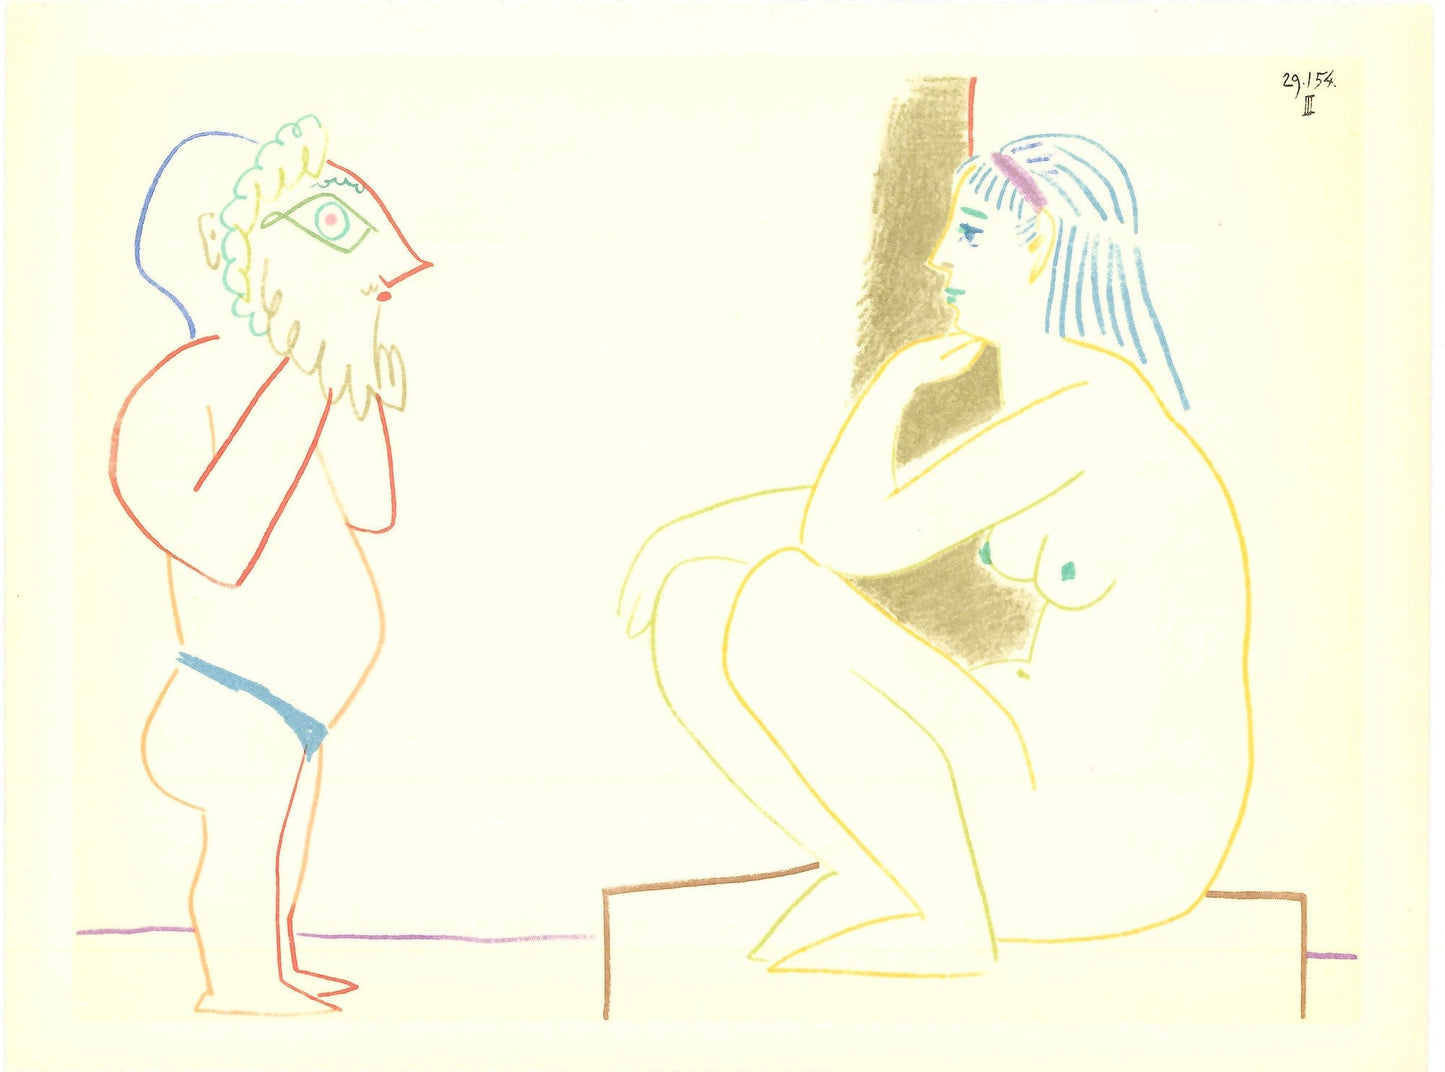 Pablo Picasso "Human Comedy" Verve Edition: Vol. 8 No 29 ZOOM